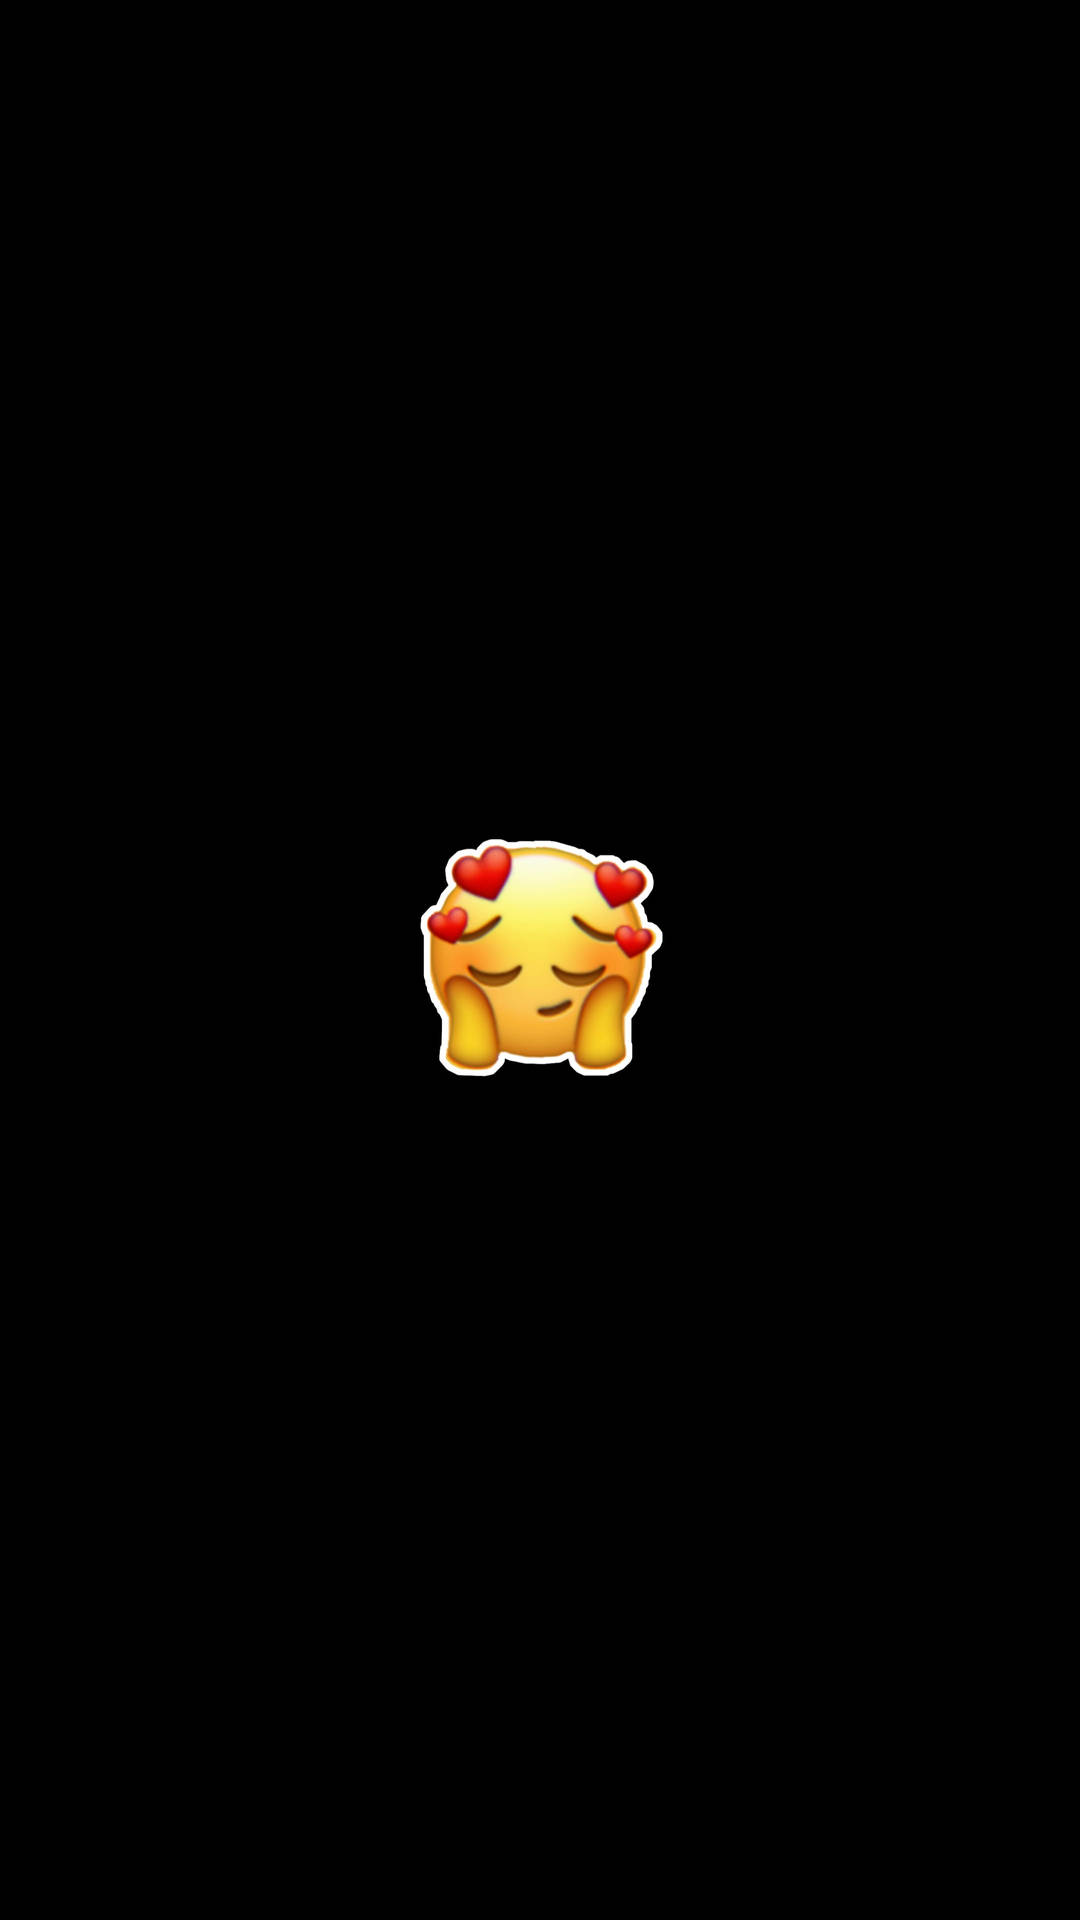 Cute Mobile In Love Emoji Wallpaper